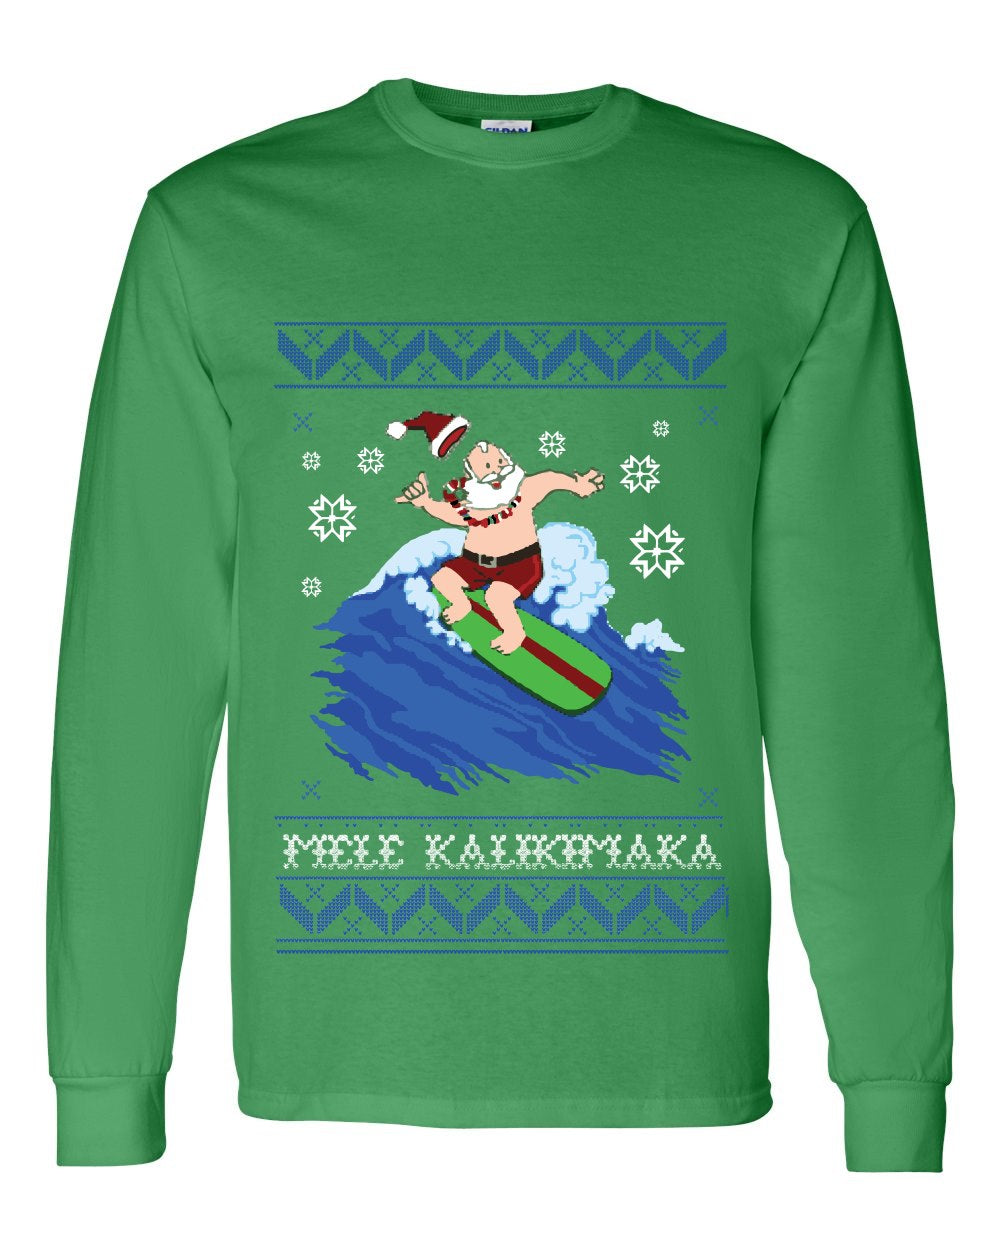 BORD Apparel Santa Mele Kalikimaka Ugly Christmas Long Sleeve T-shirt